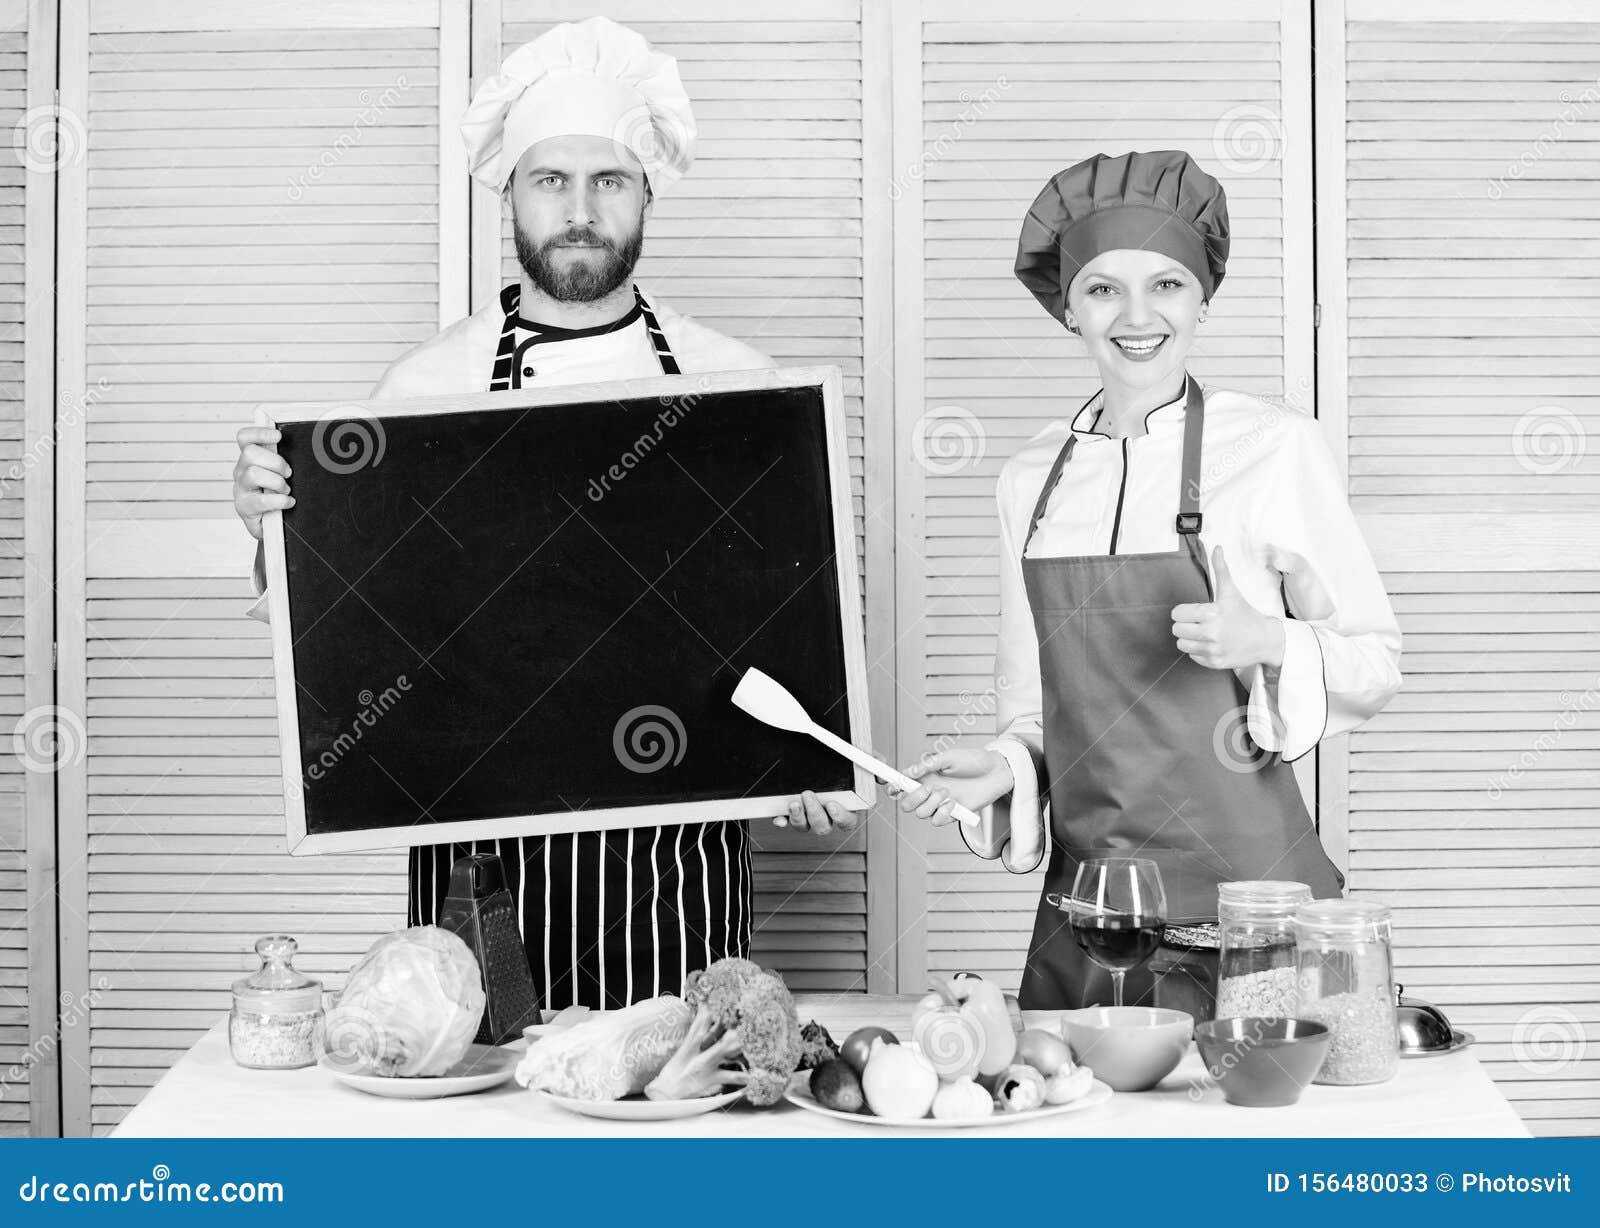 Hiring Staff Woman And Man Chef Hold Blackboard Copy Space Job